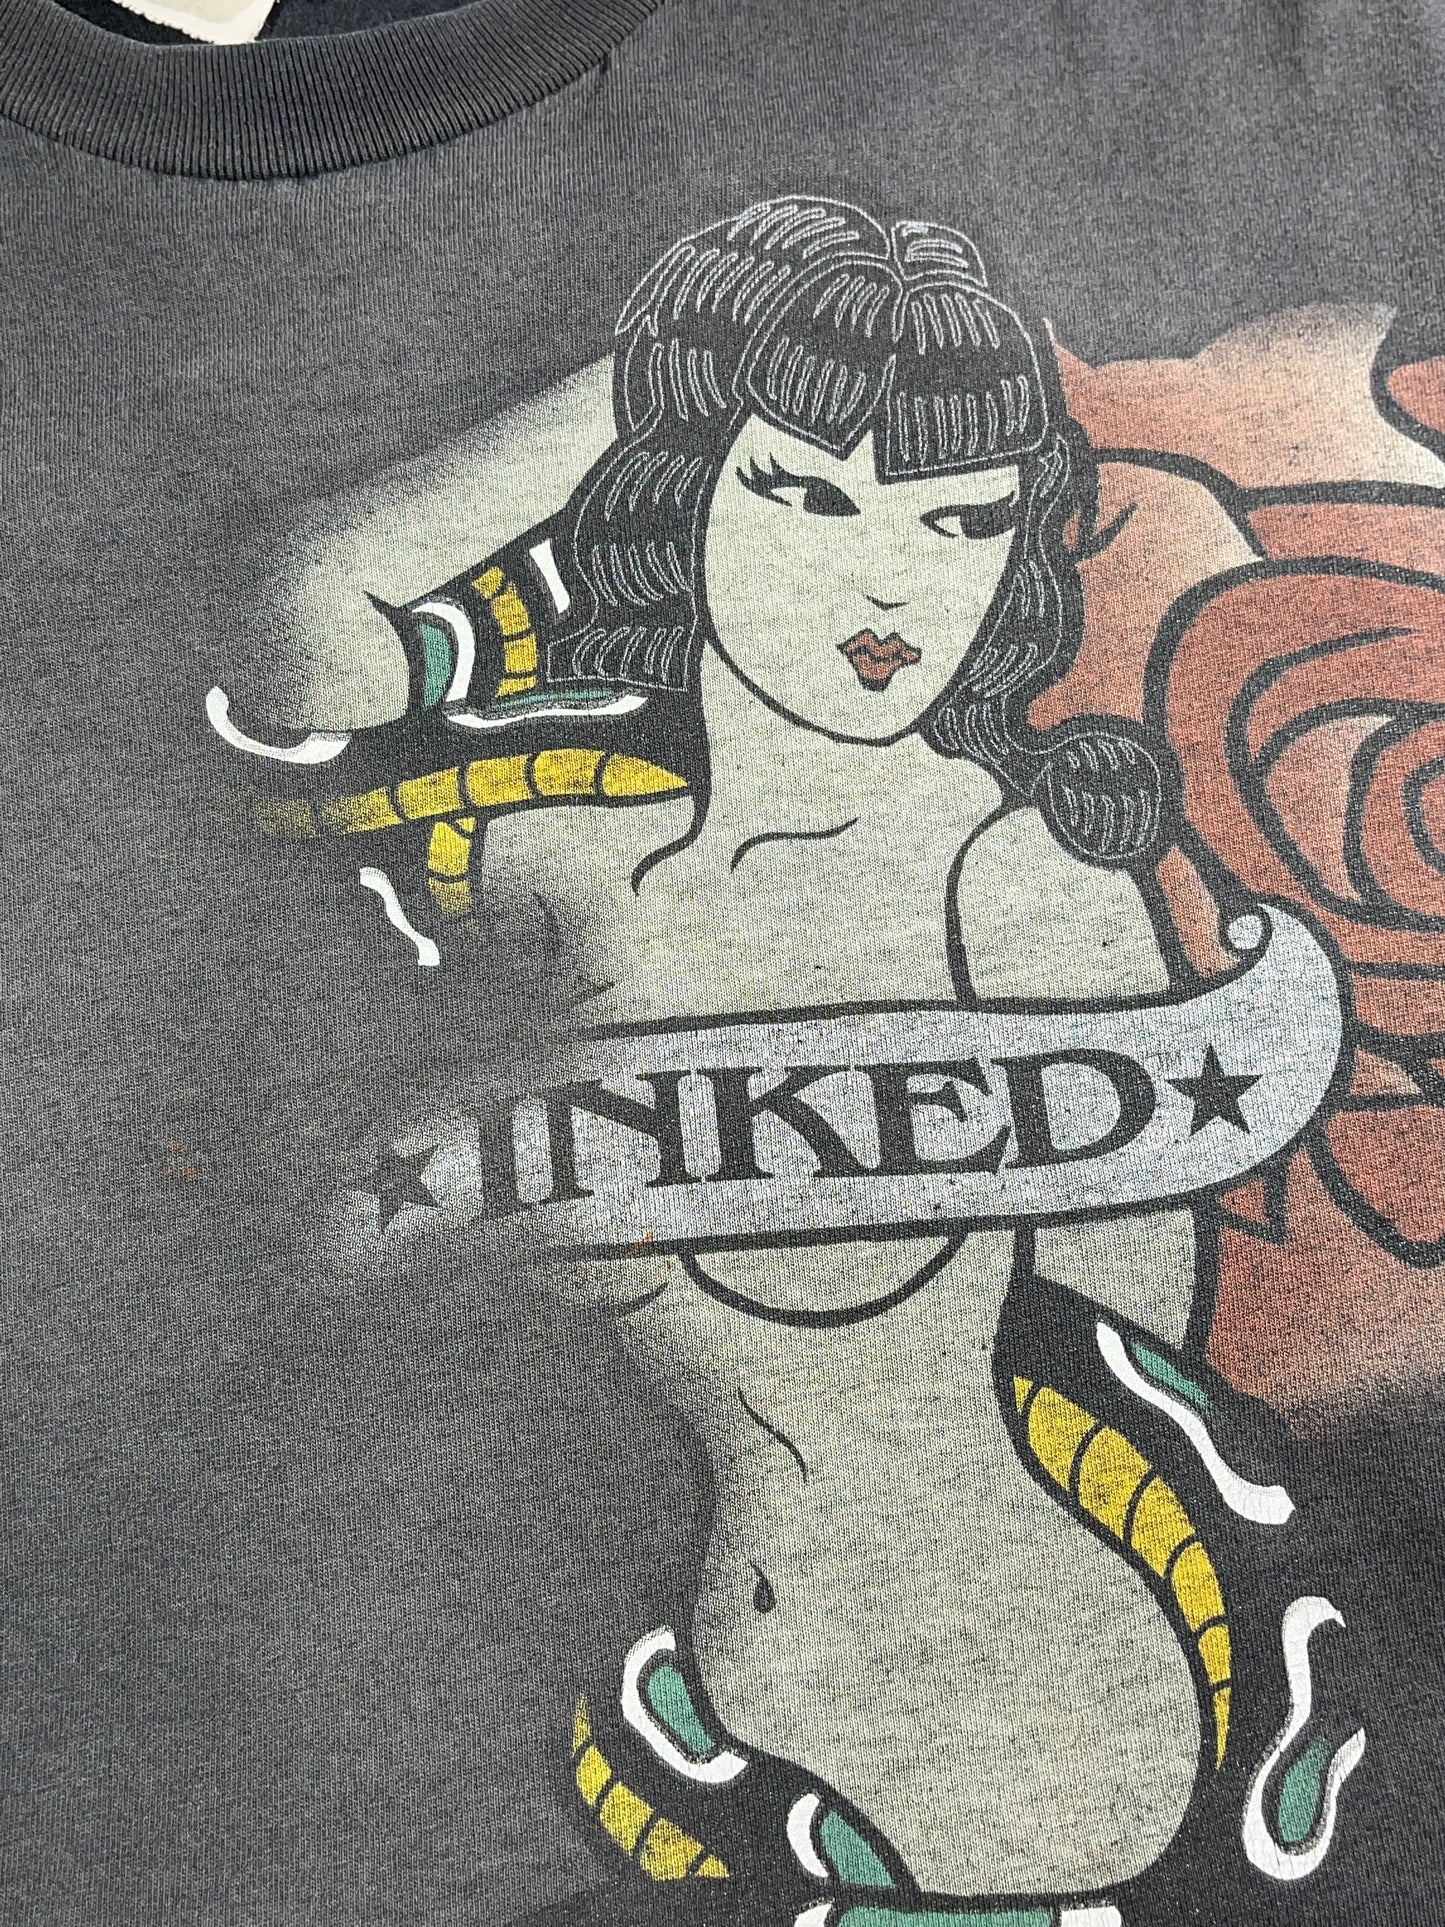 Vintage Inked T-Shirt Tattoo Art